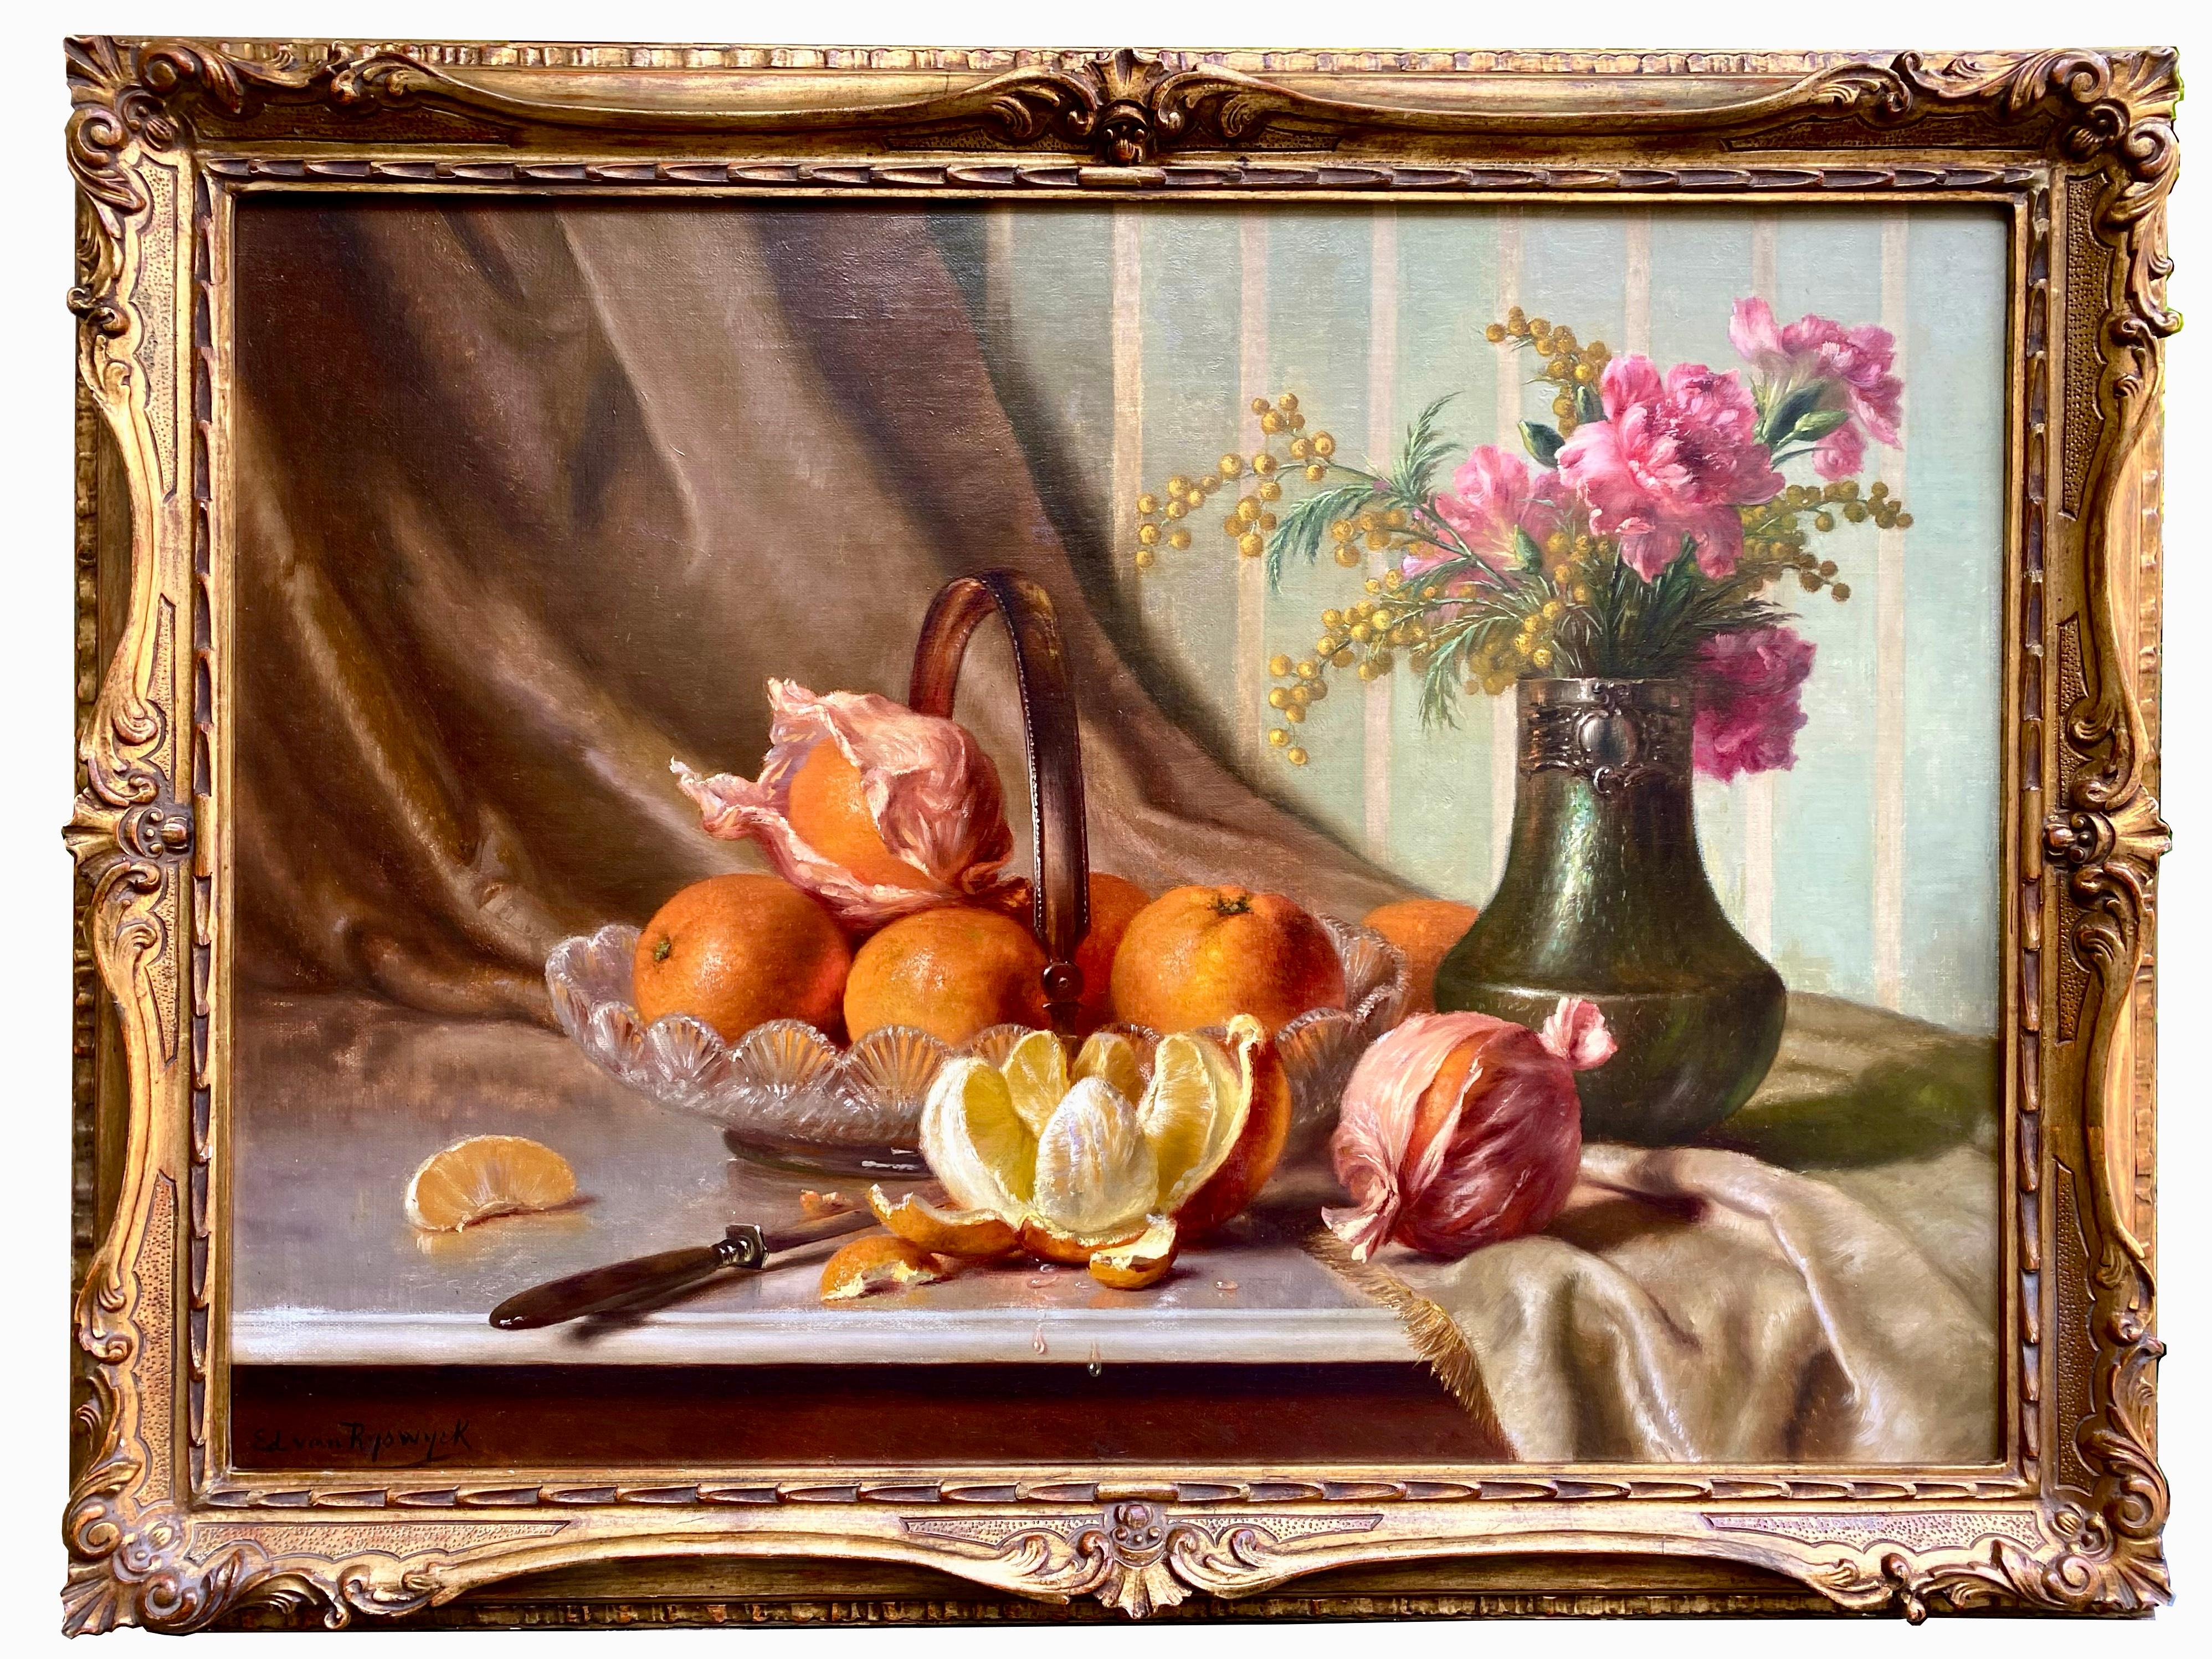 Van Ryswyck Edward
Antwerp 1871 – 1931
Belgian Painter

Still Life with Oranges and Flowers
Signature: Signed bottom left
Medium: Oil on canvas
Dimensions: Image size 51 x 72 cm, frame size 61,50 x 81,50 cm

Biography: Van Ryswyck Edward was born on